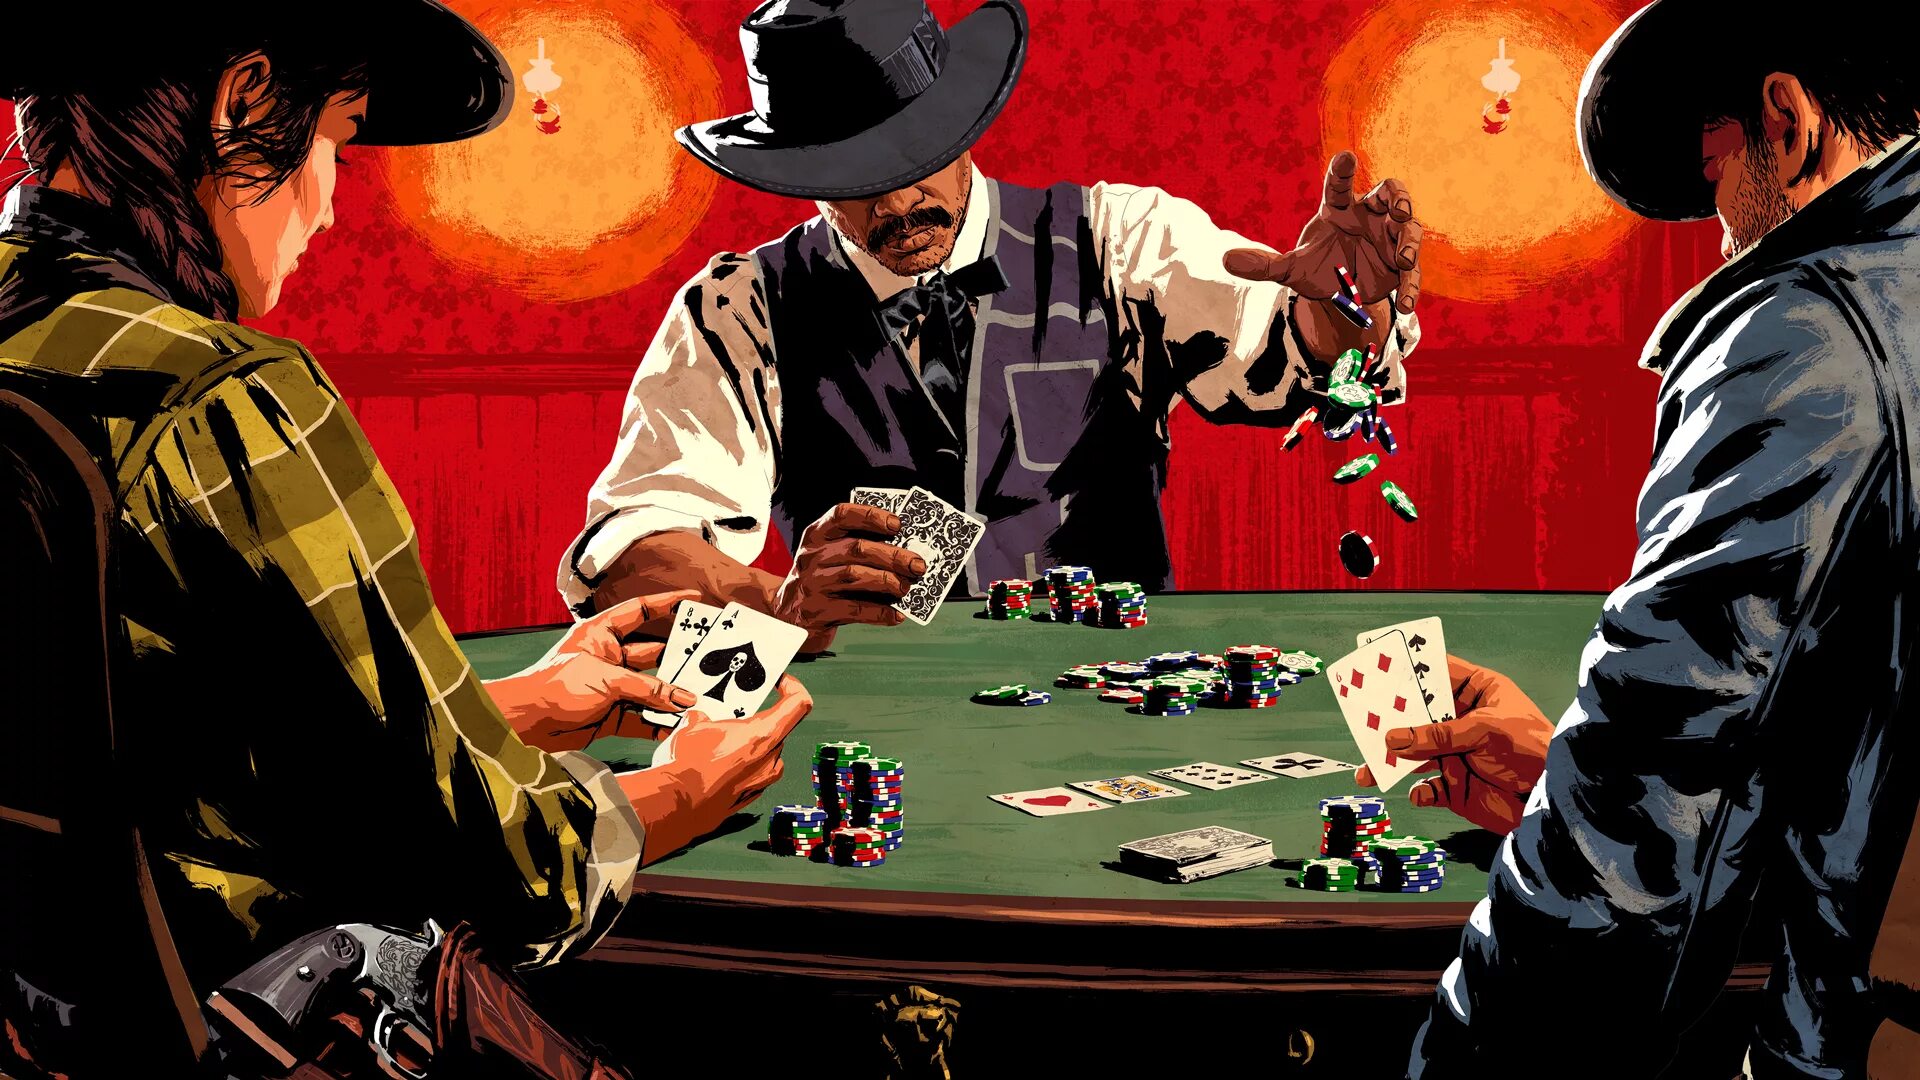 Painting играть. Red Dead Redemption Покер. Red Dead Redemption 2 Poker. Энди Томас картины дикий Запад Покер. Игральные карты Red Dead Redemption 2.